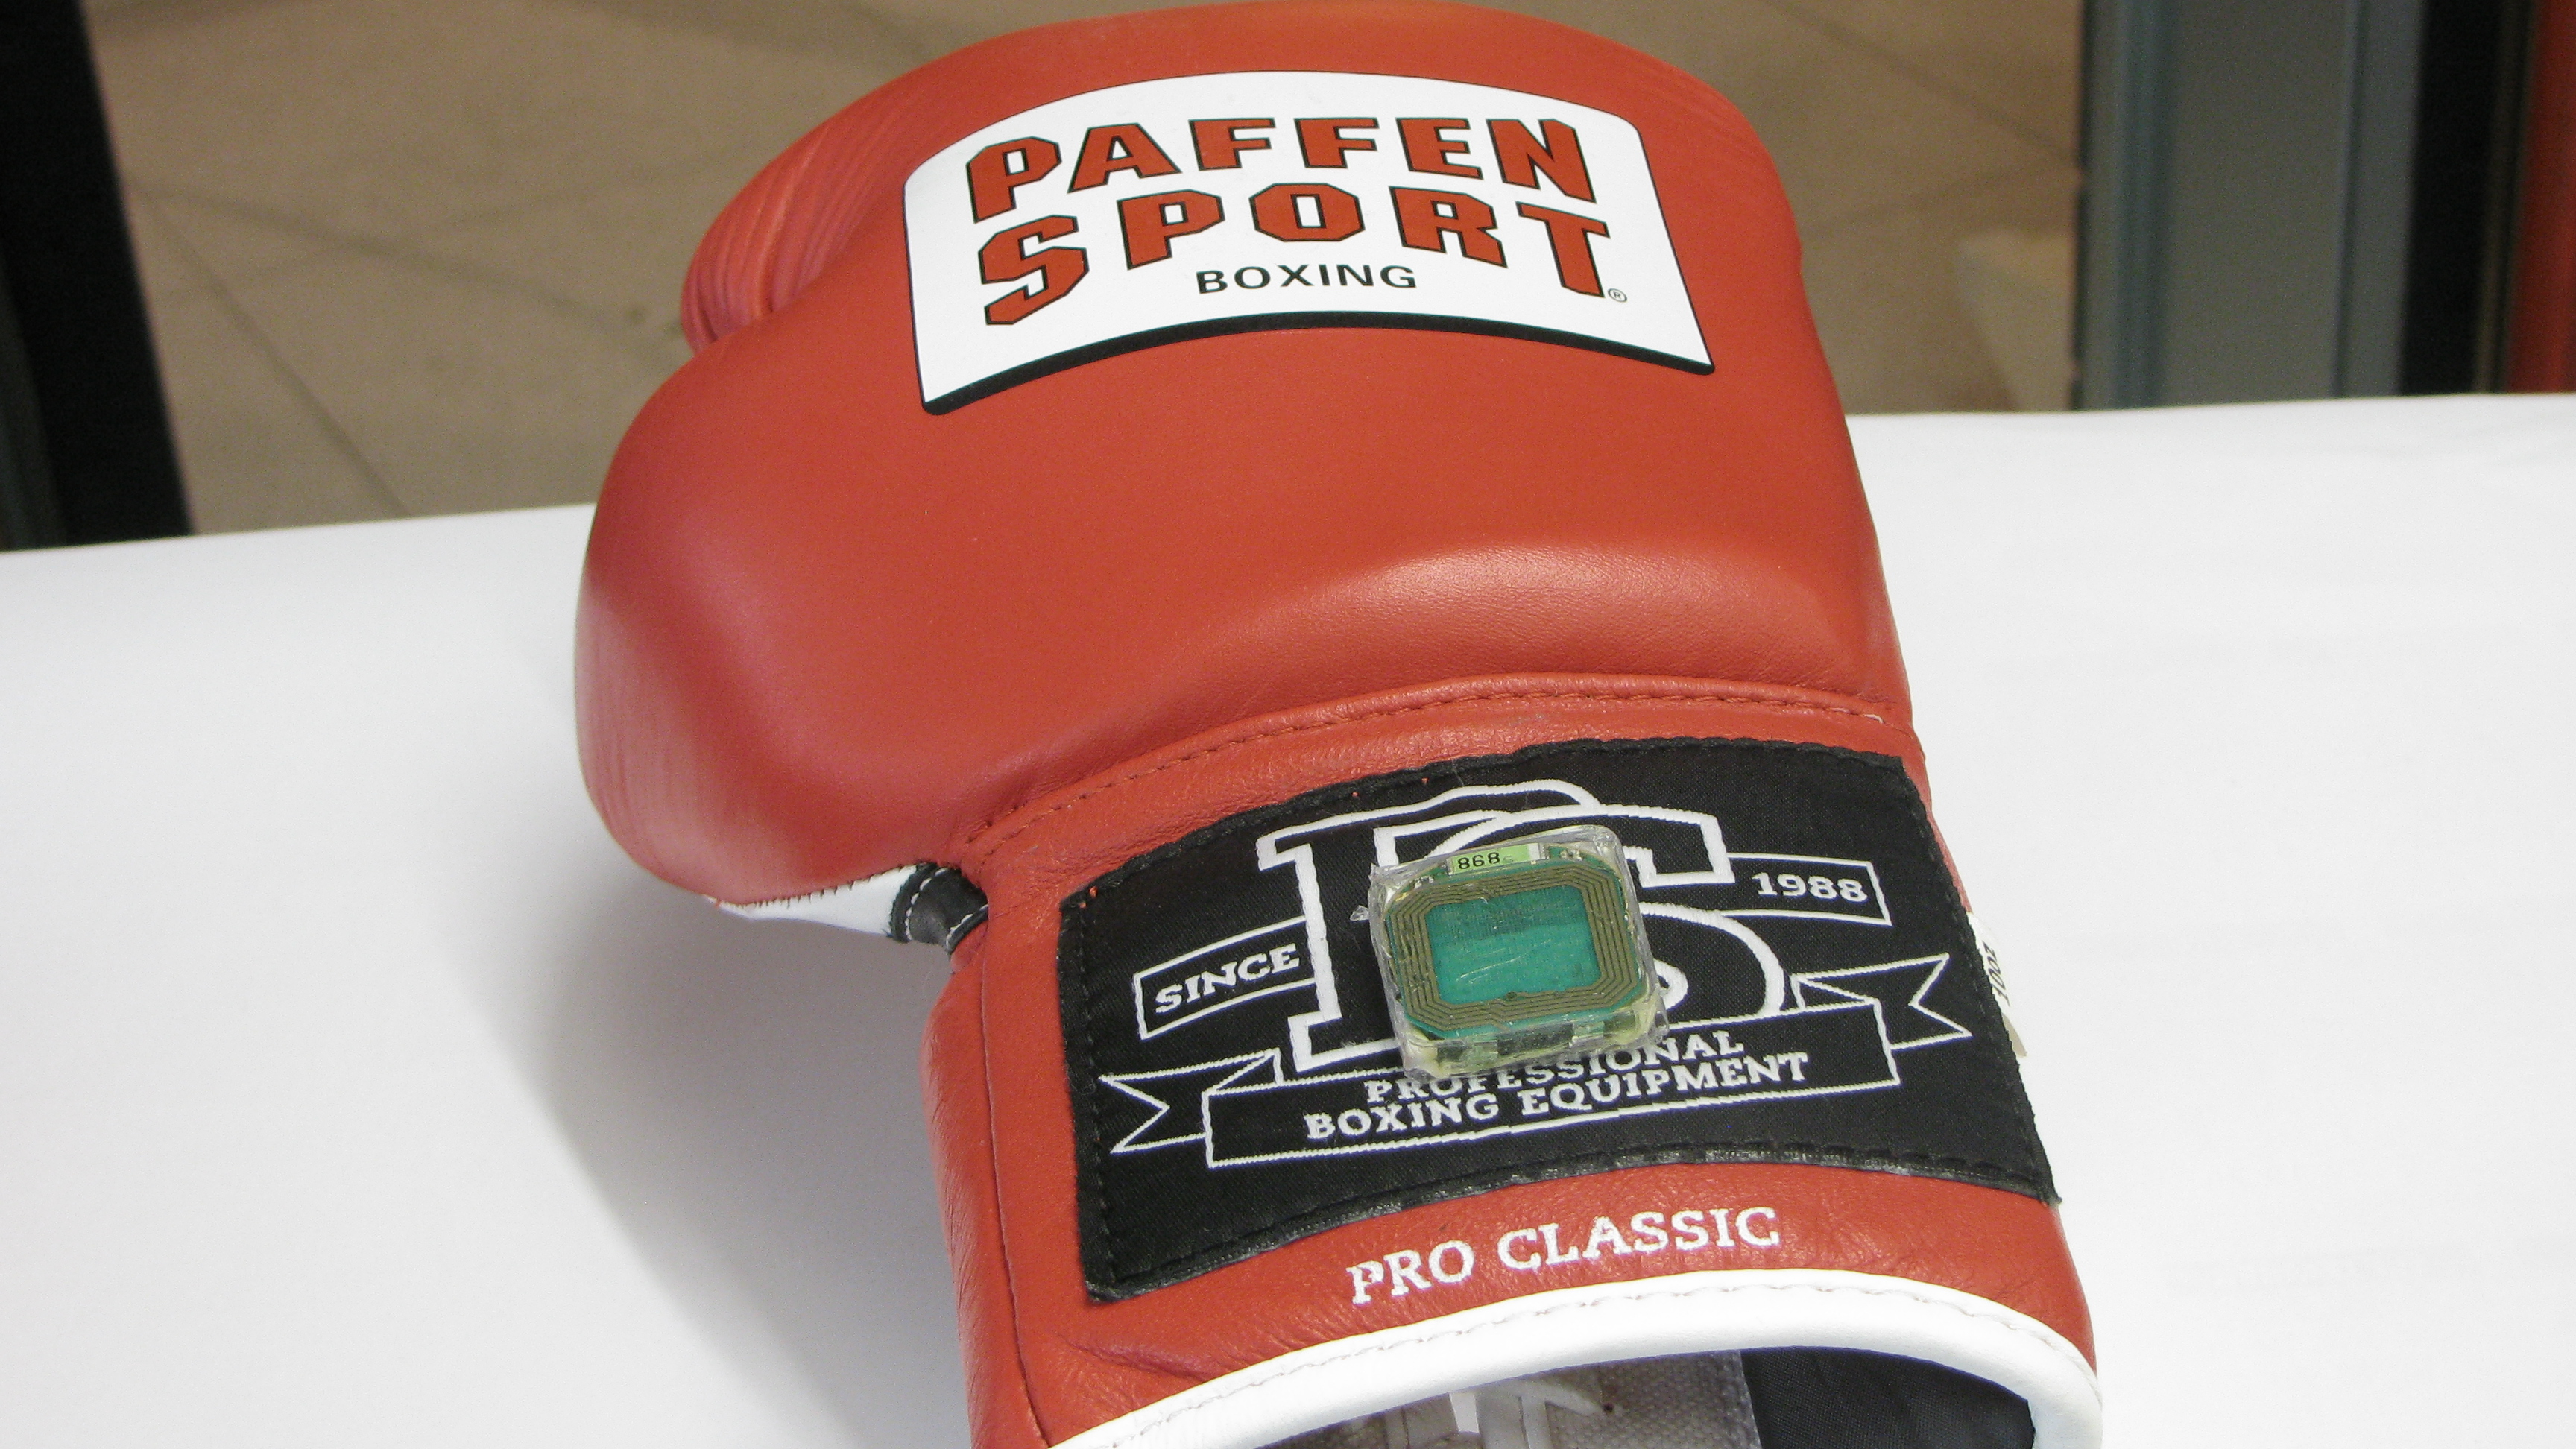 Embedded Wireless Sensor Technology for Boxing